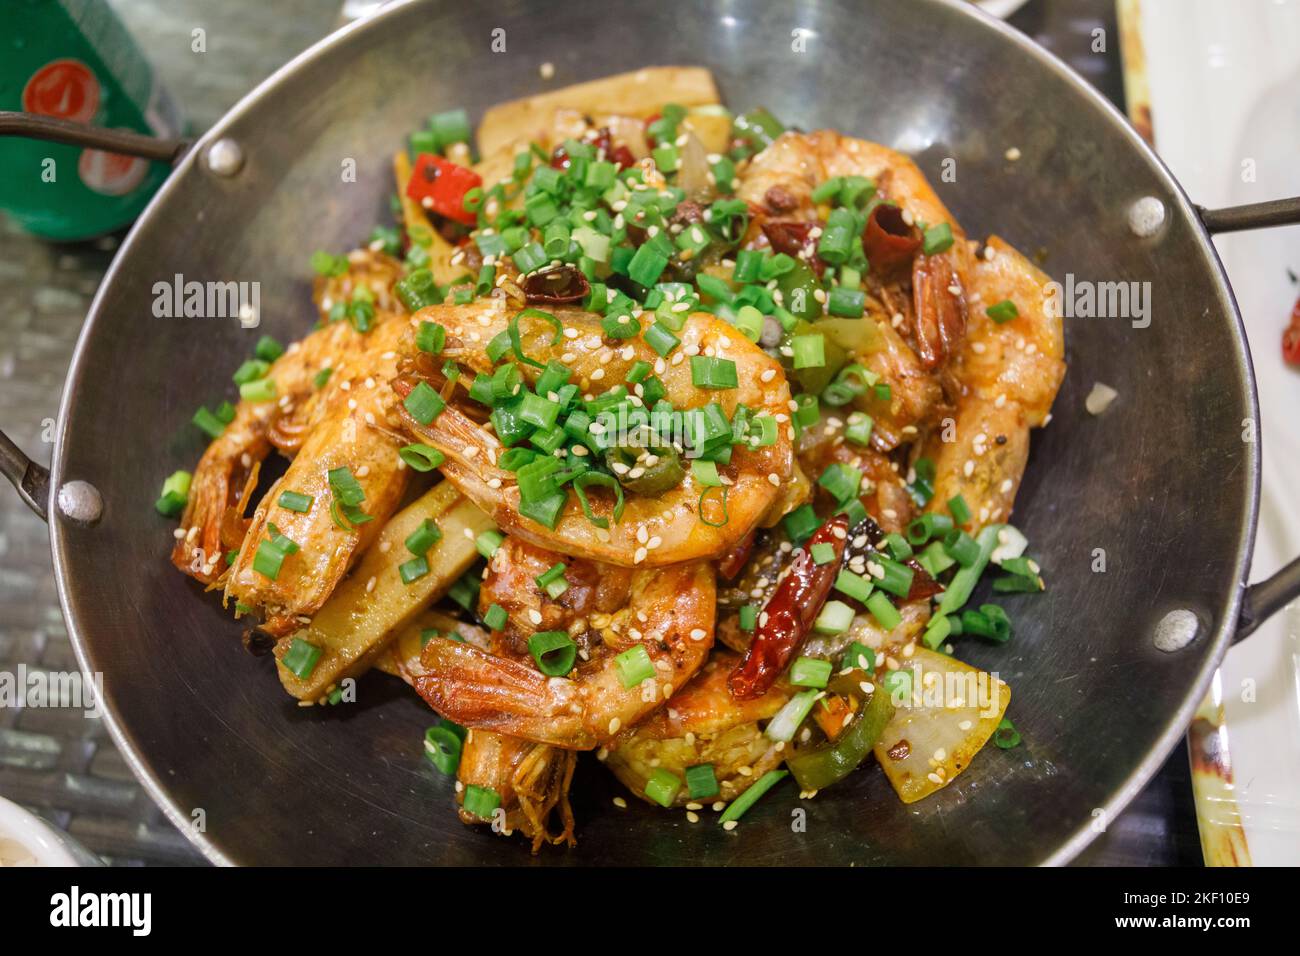 Dish of Chili prawns with the shell on, Chinatown, Singapore Stock Photo